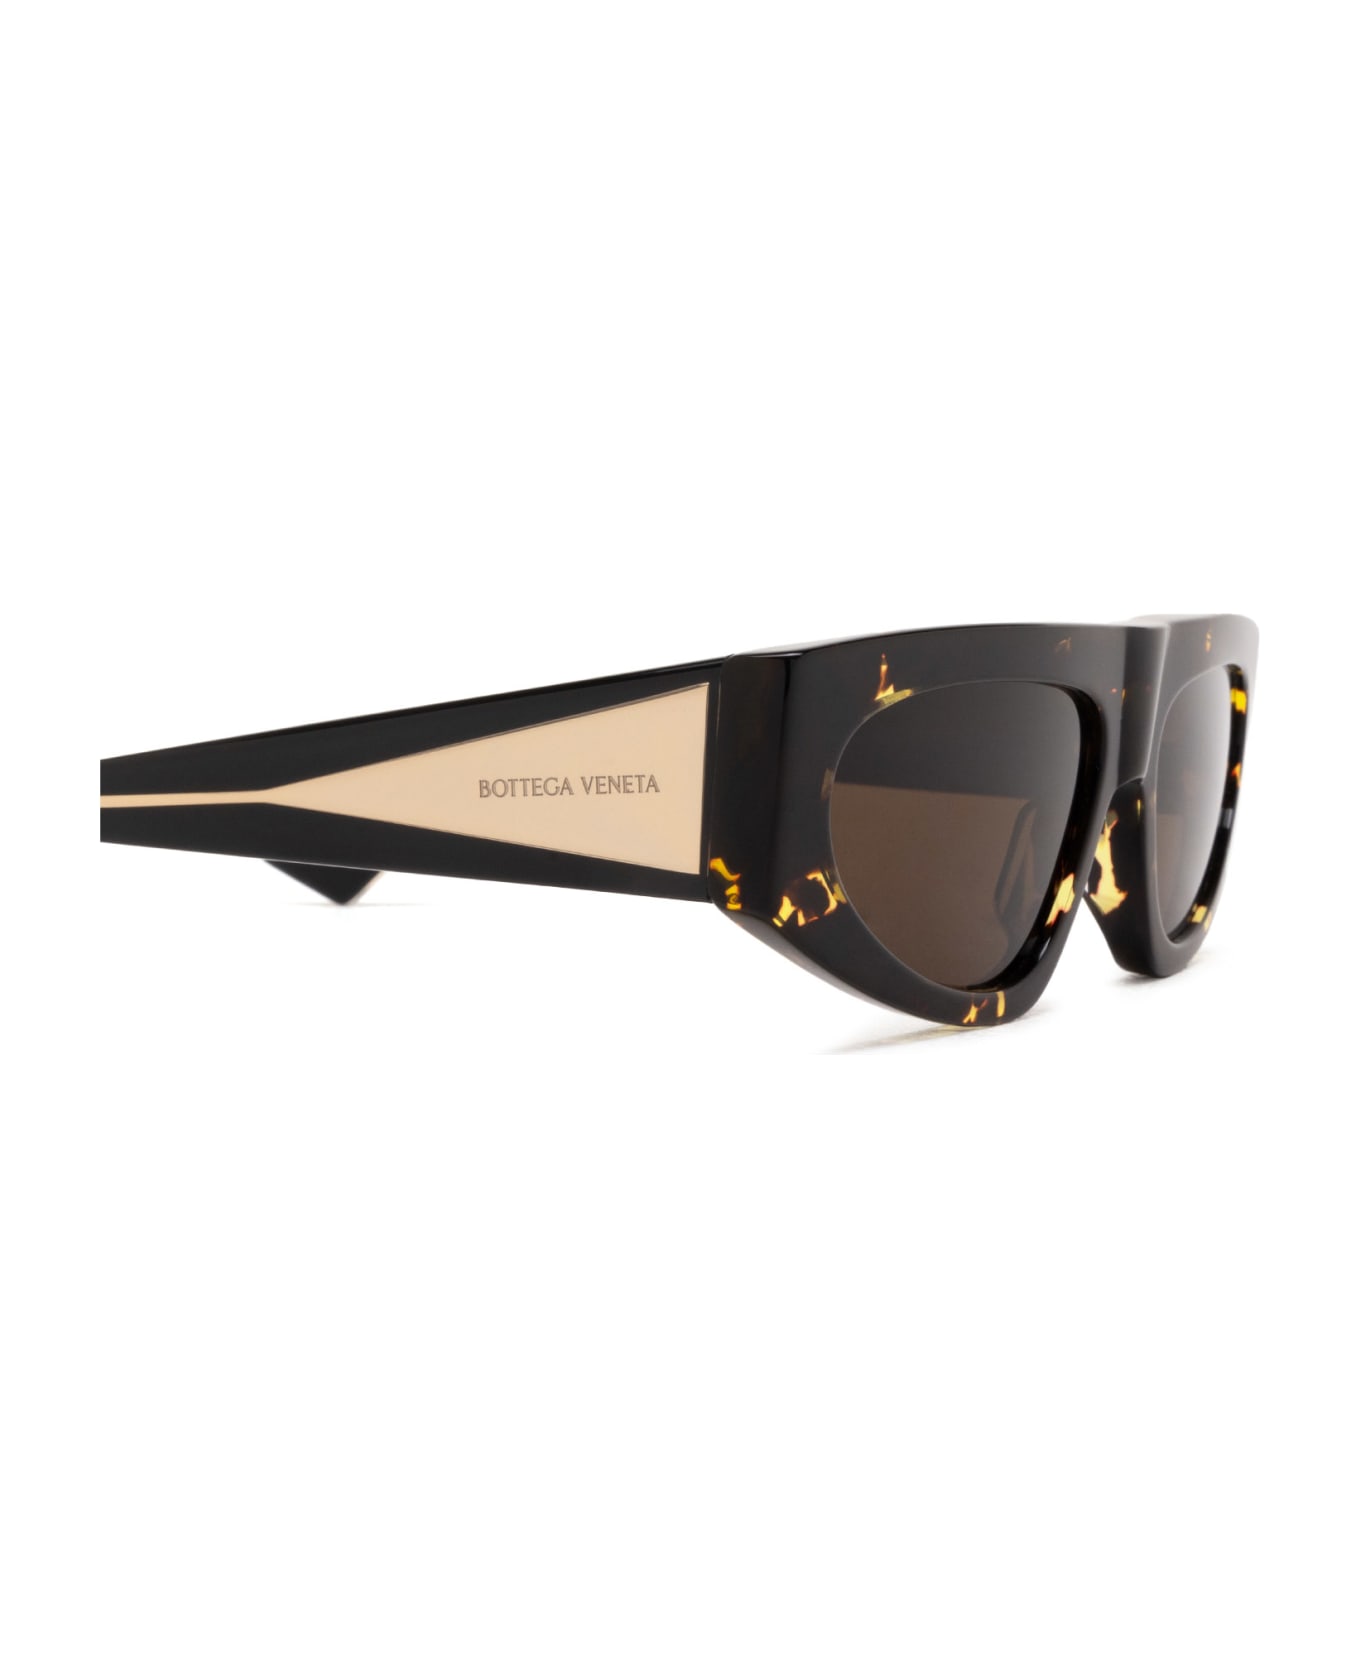 Bottega Veneta Eyewear Bv1277s Havana Sunglasses - Havana サングラス